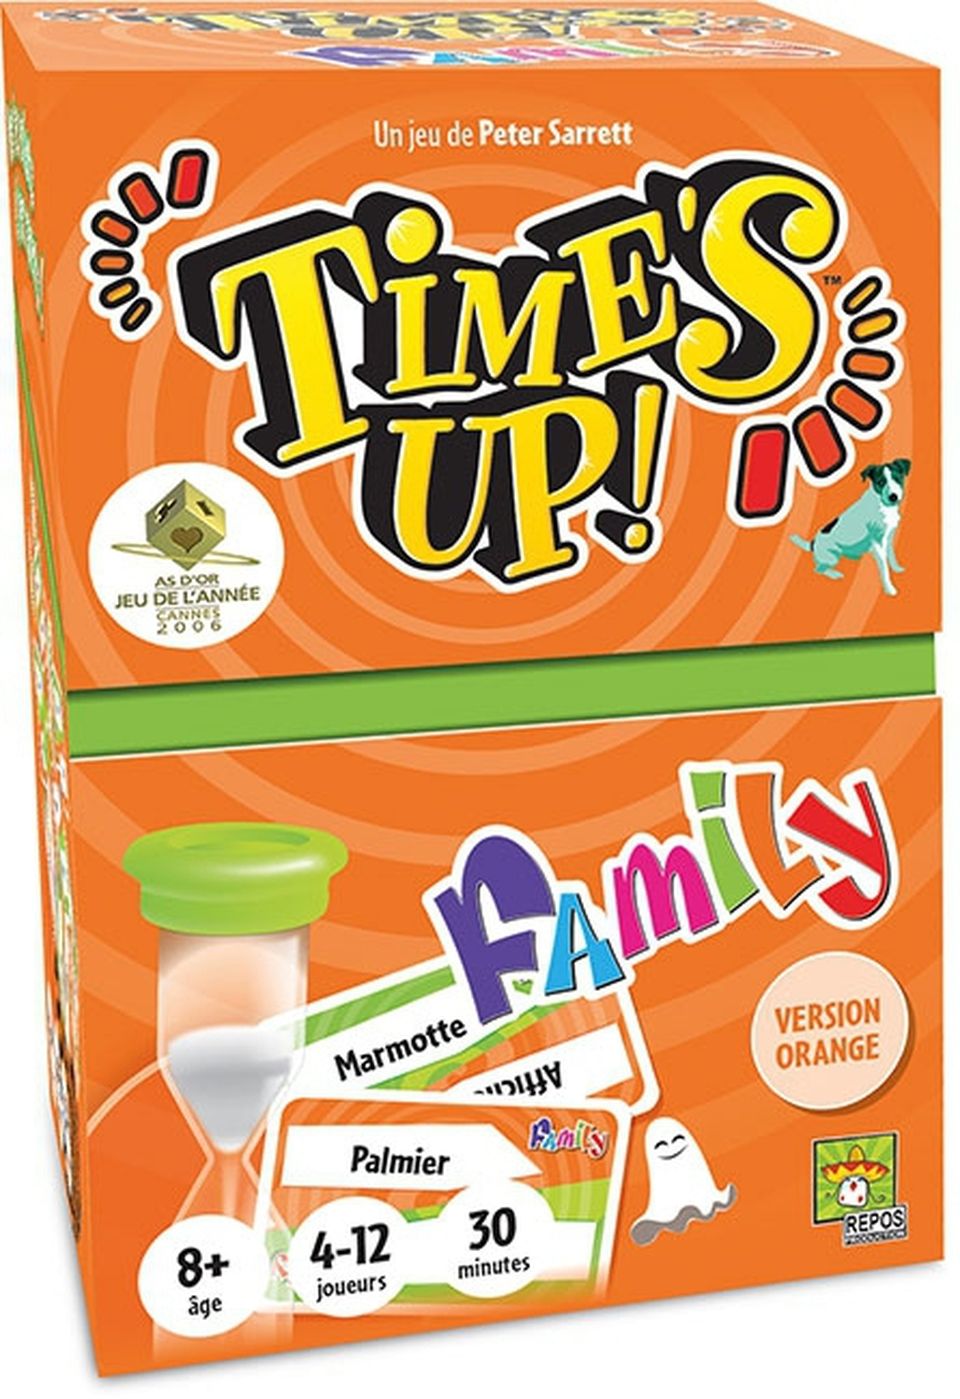 Time's up family 2 (orange) image